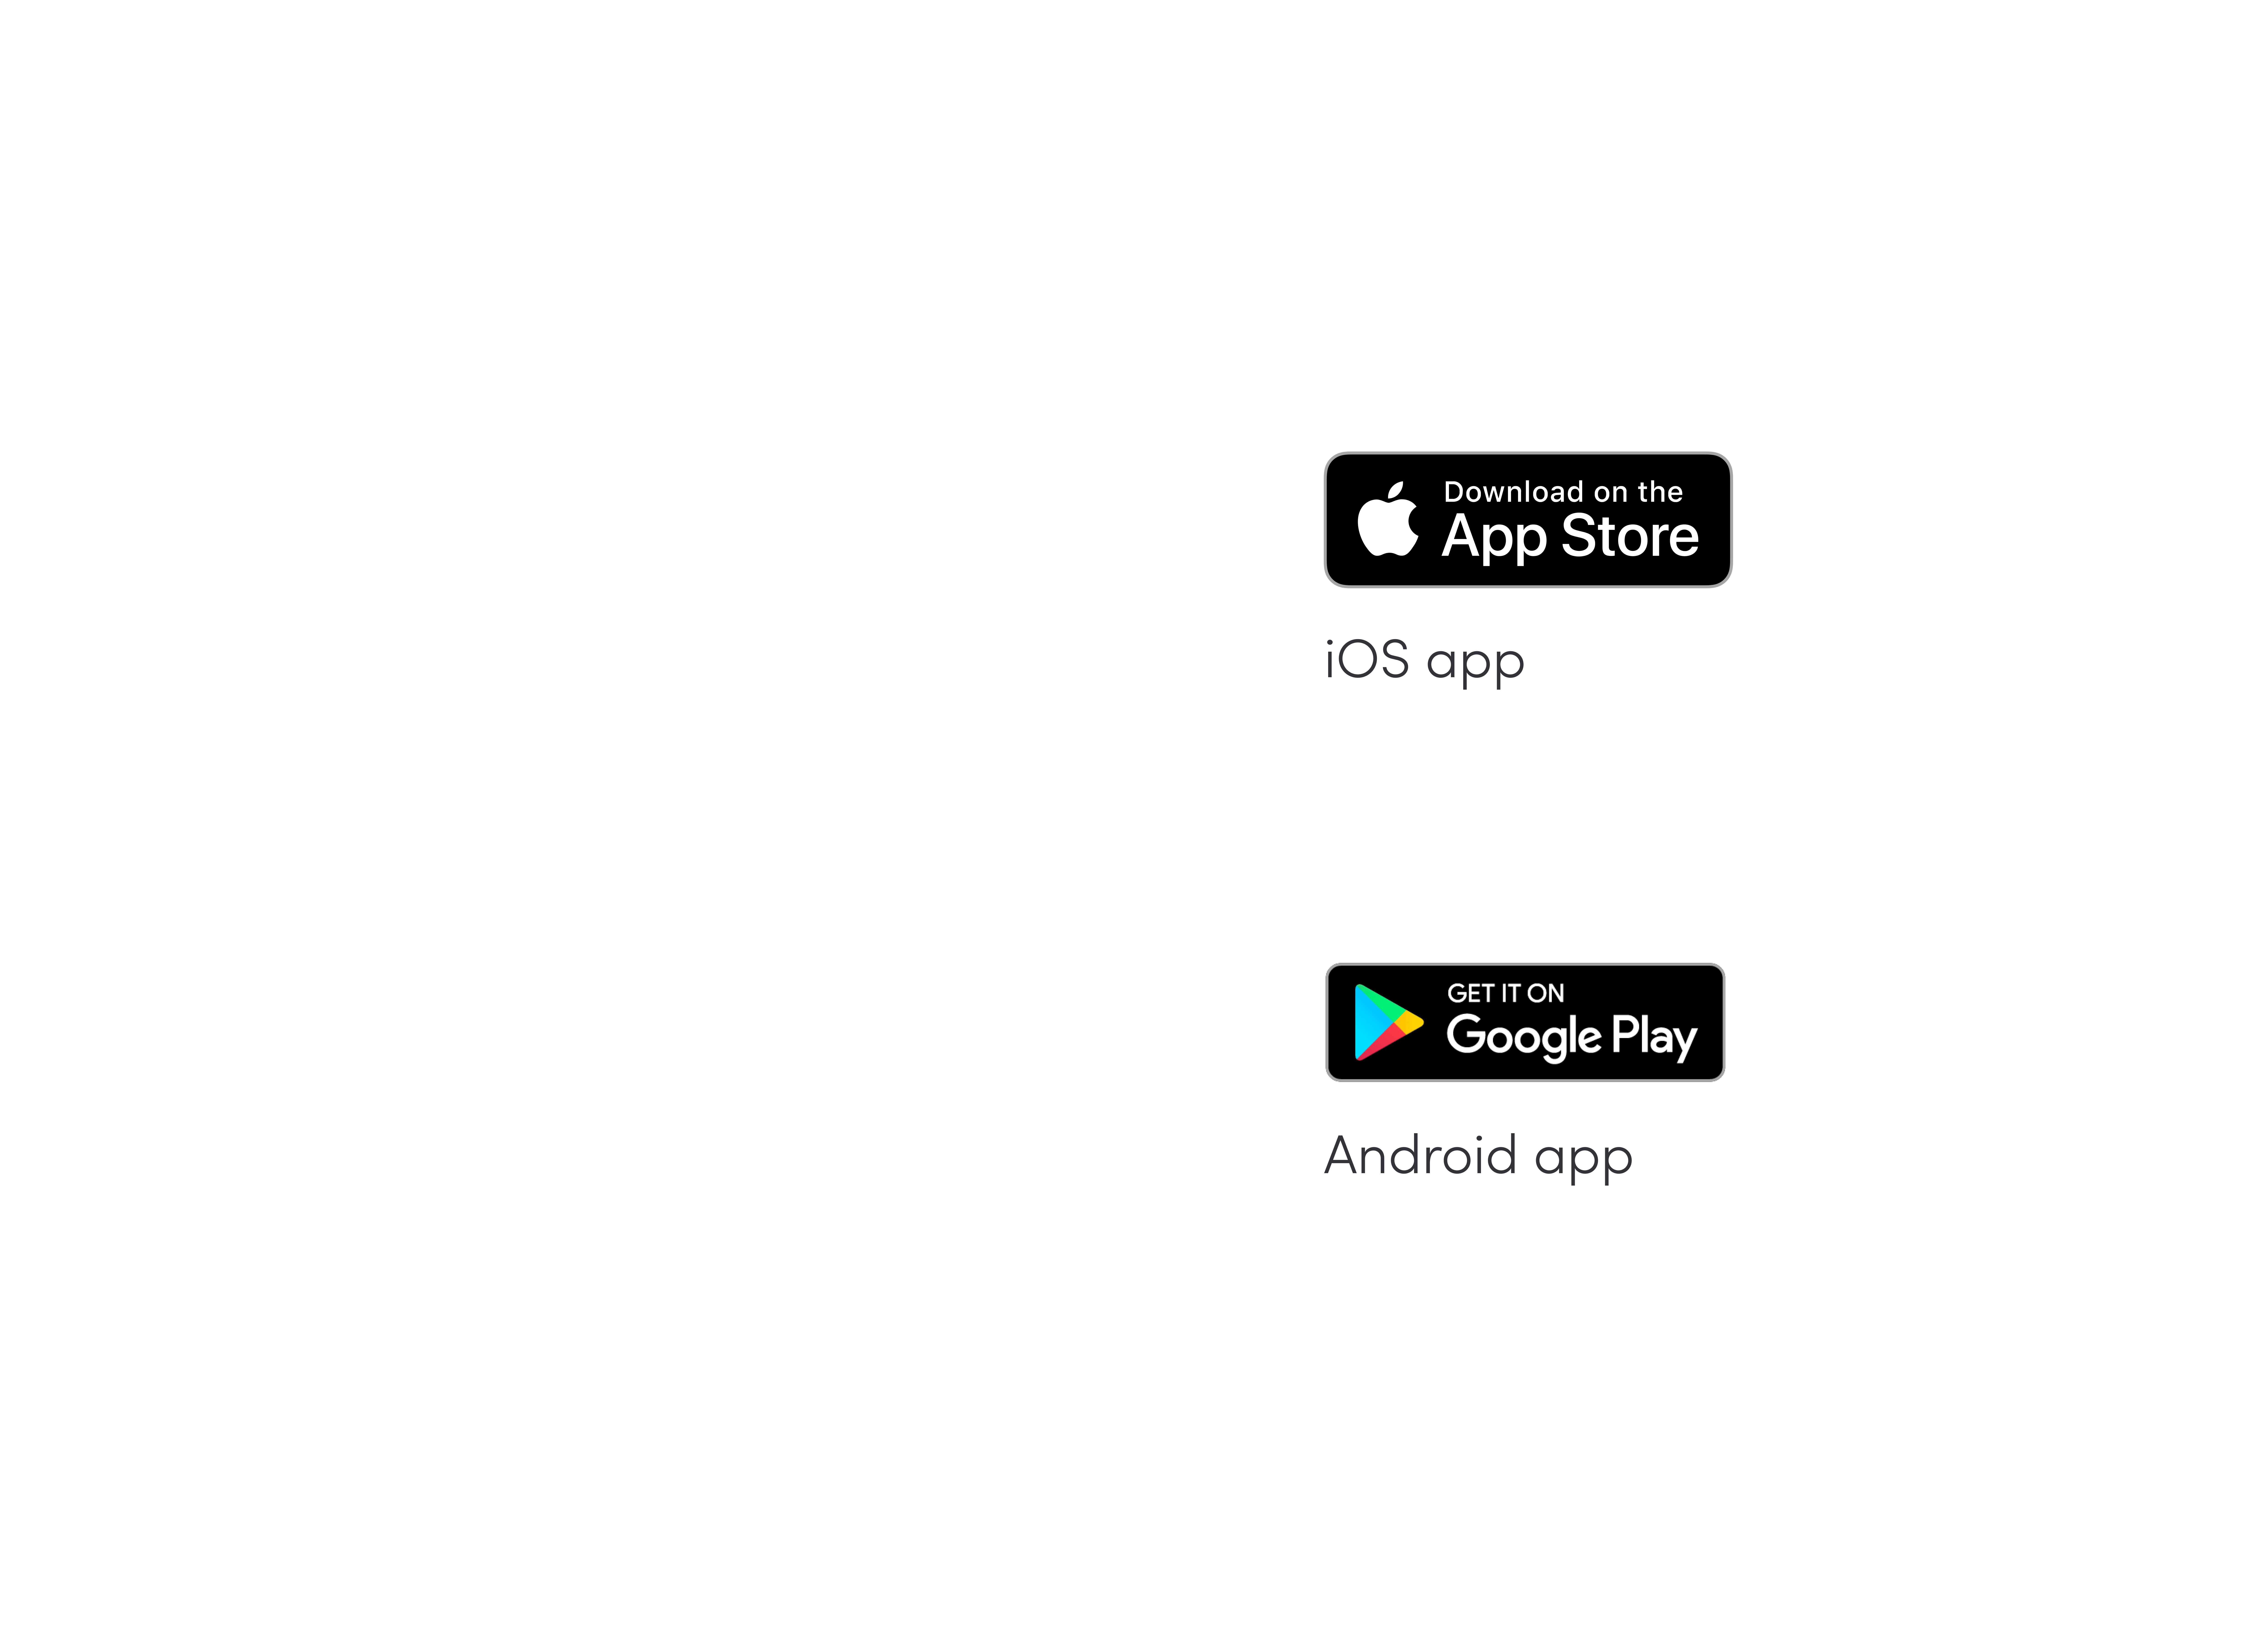 iOS app & Android app badges